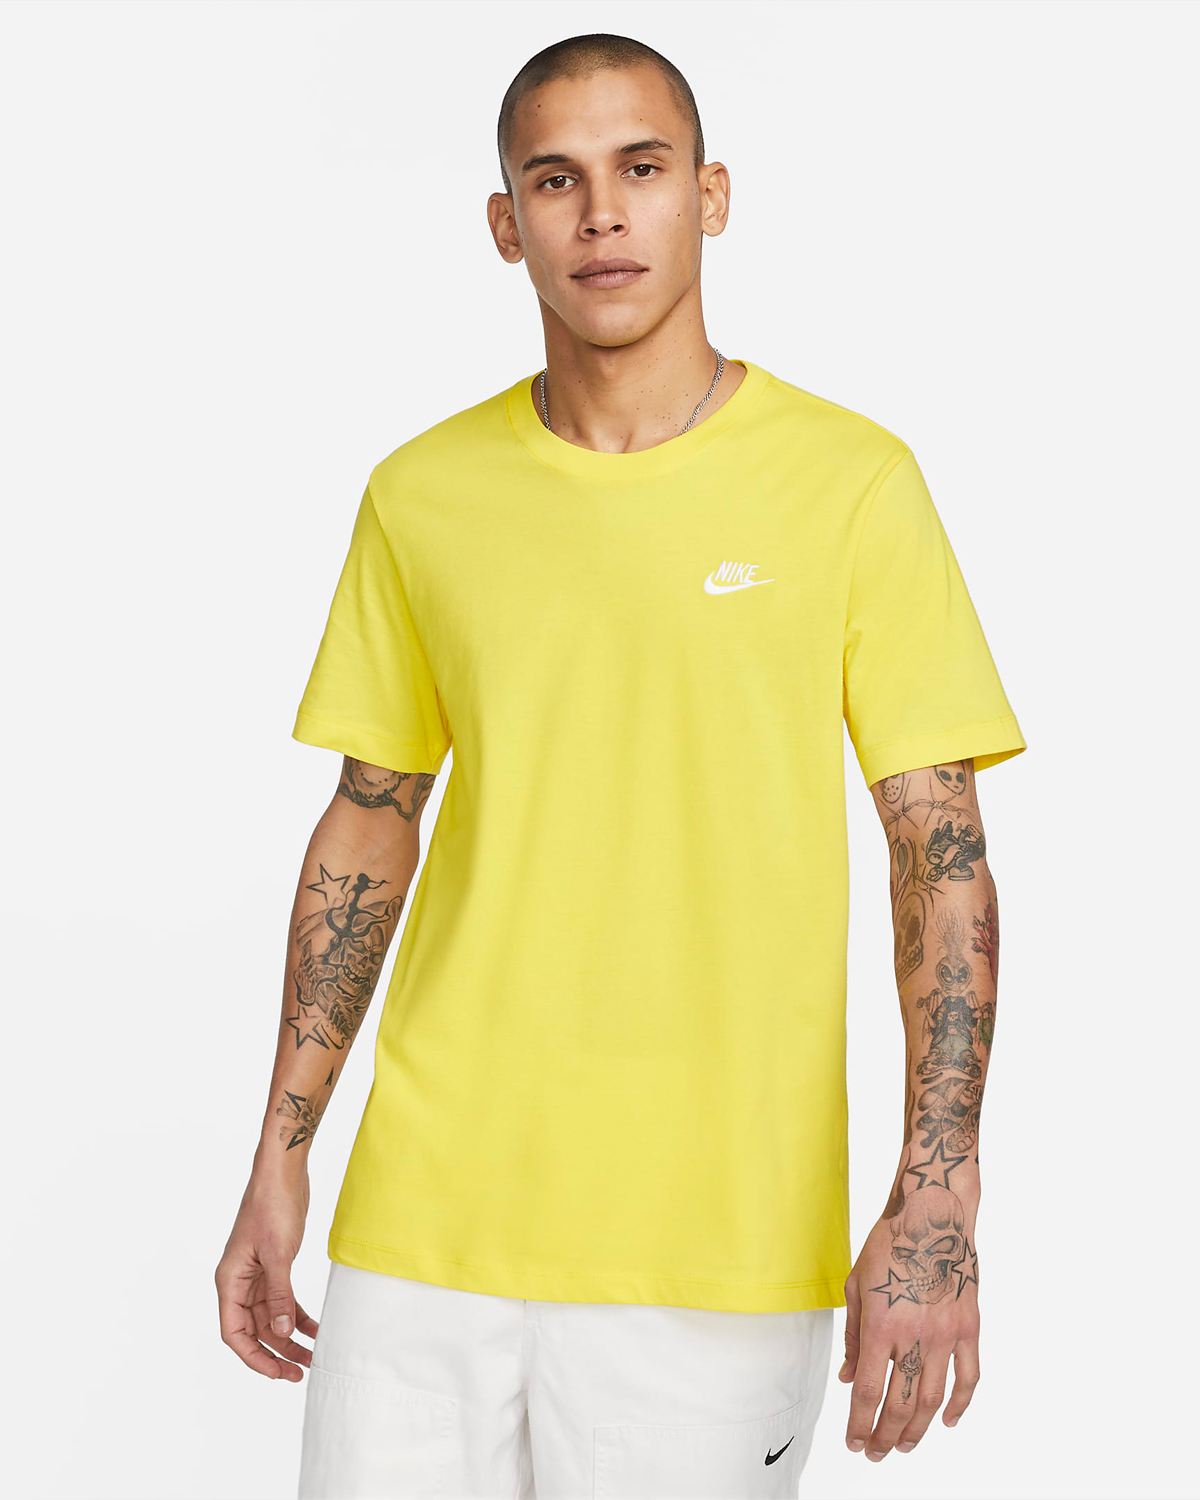 Nike Sportswear Opti Yellow Shirts Clothing Sneaker Outfits